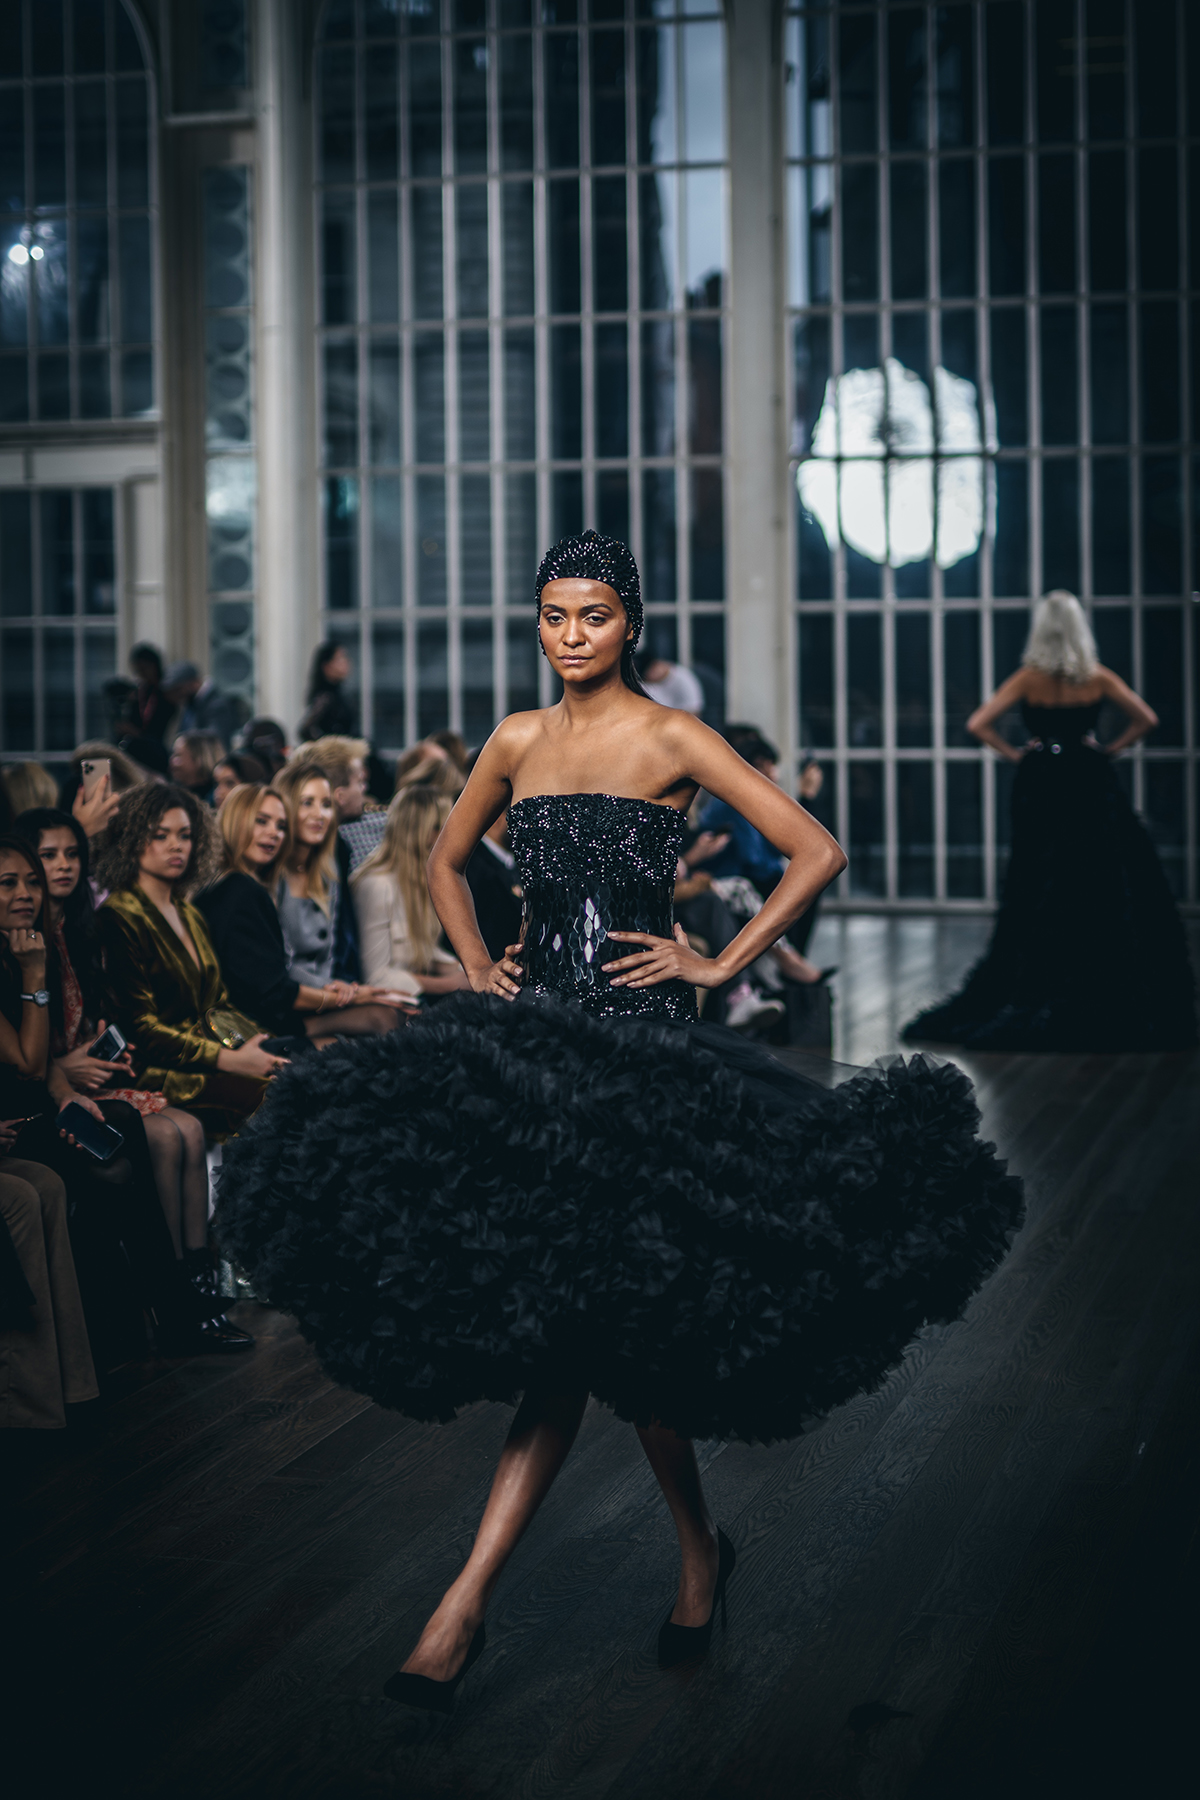 Model on catwalk wearing black feathered dress